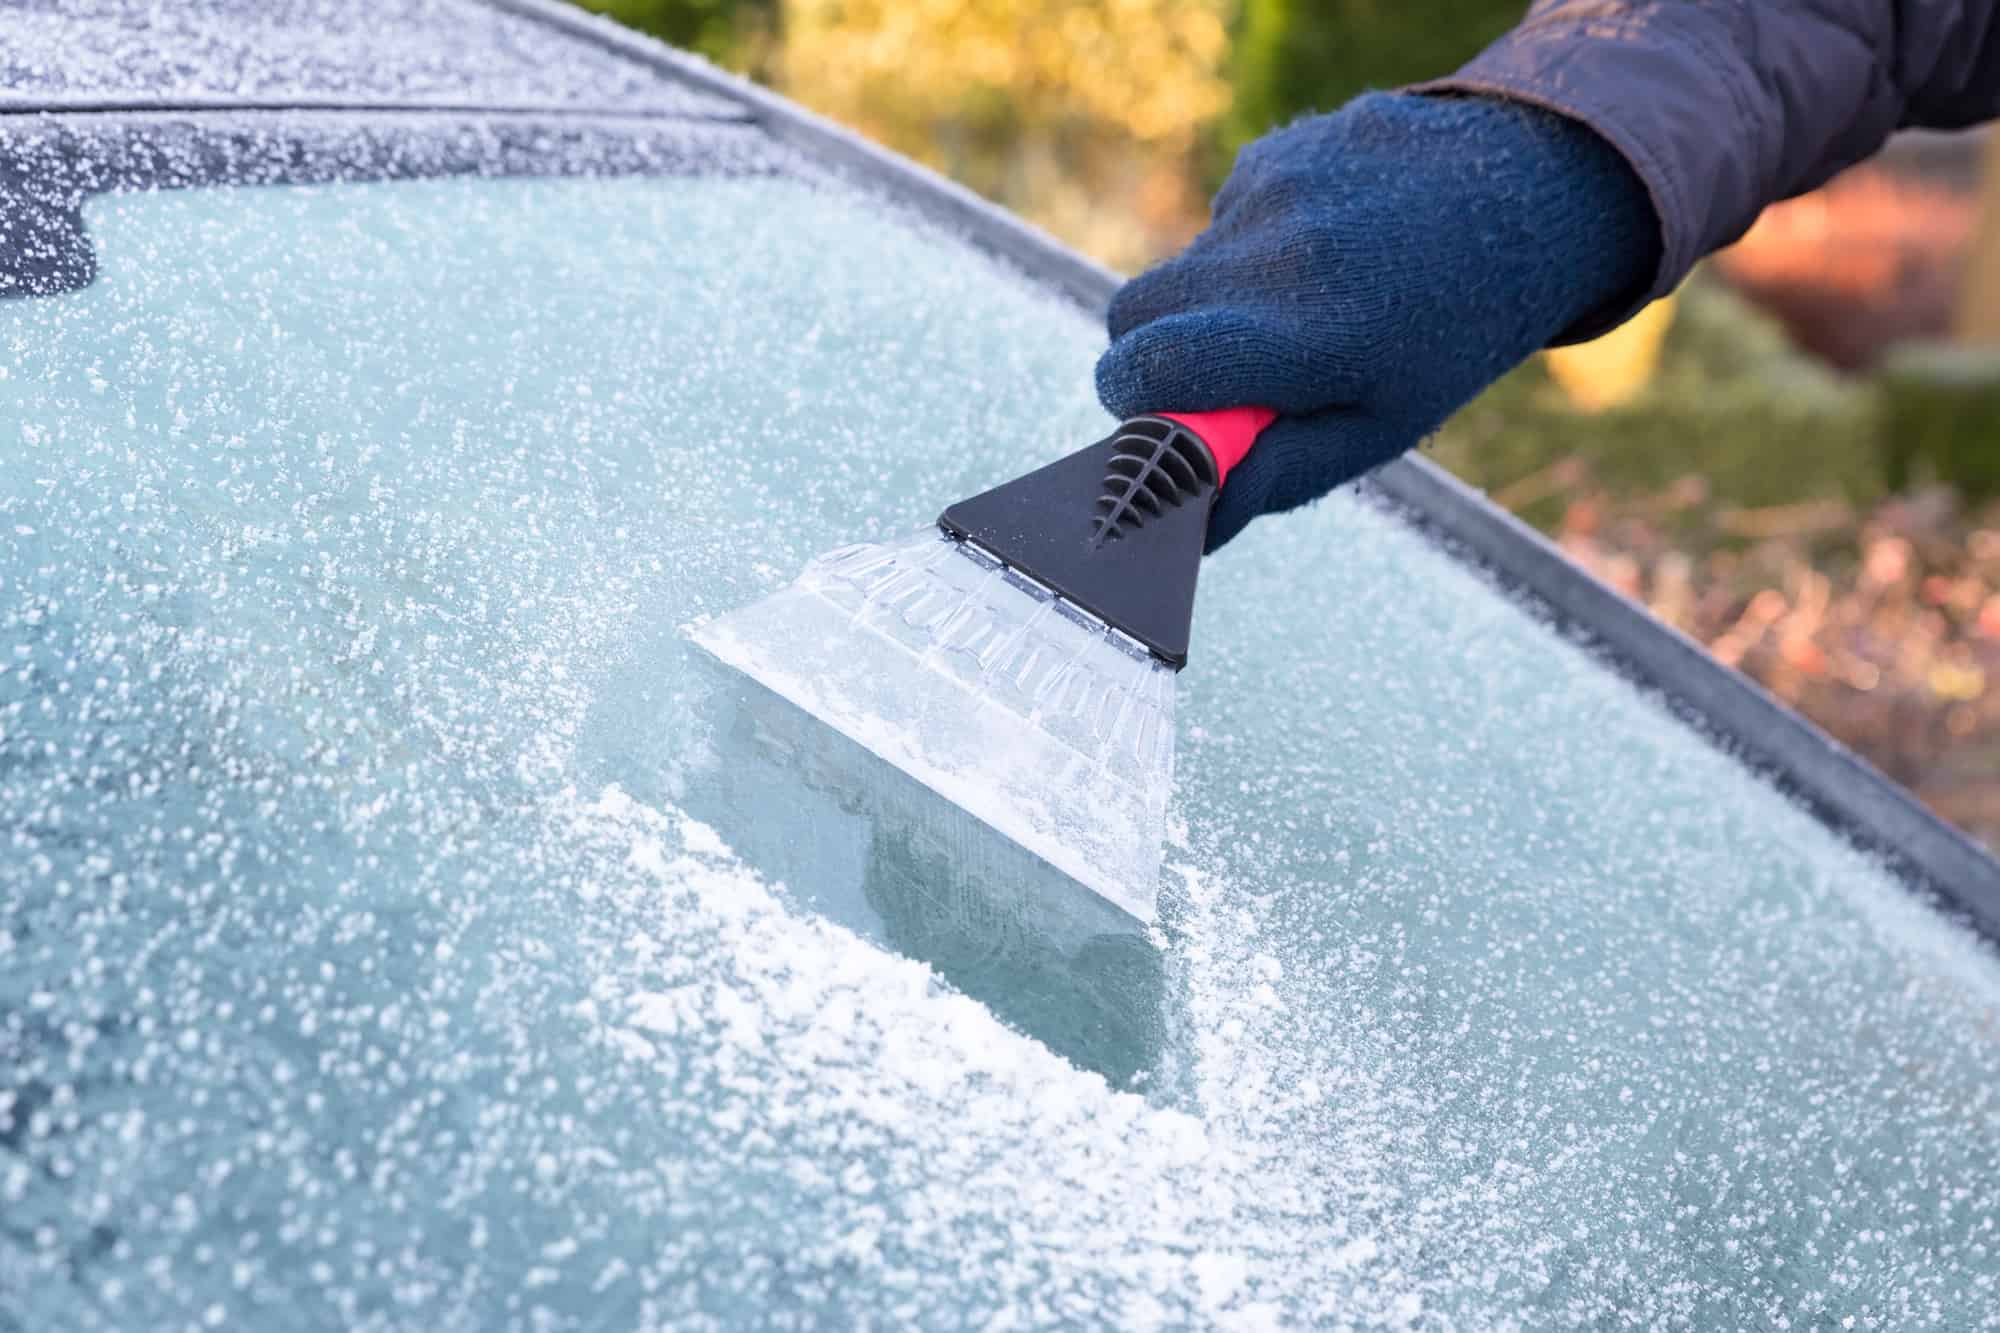 https://singlegirlsdiy.com/wp-content/uploads/2022/01/woman-using-a-ice-scraper-on-car-window.jpeg